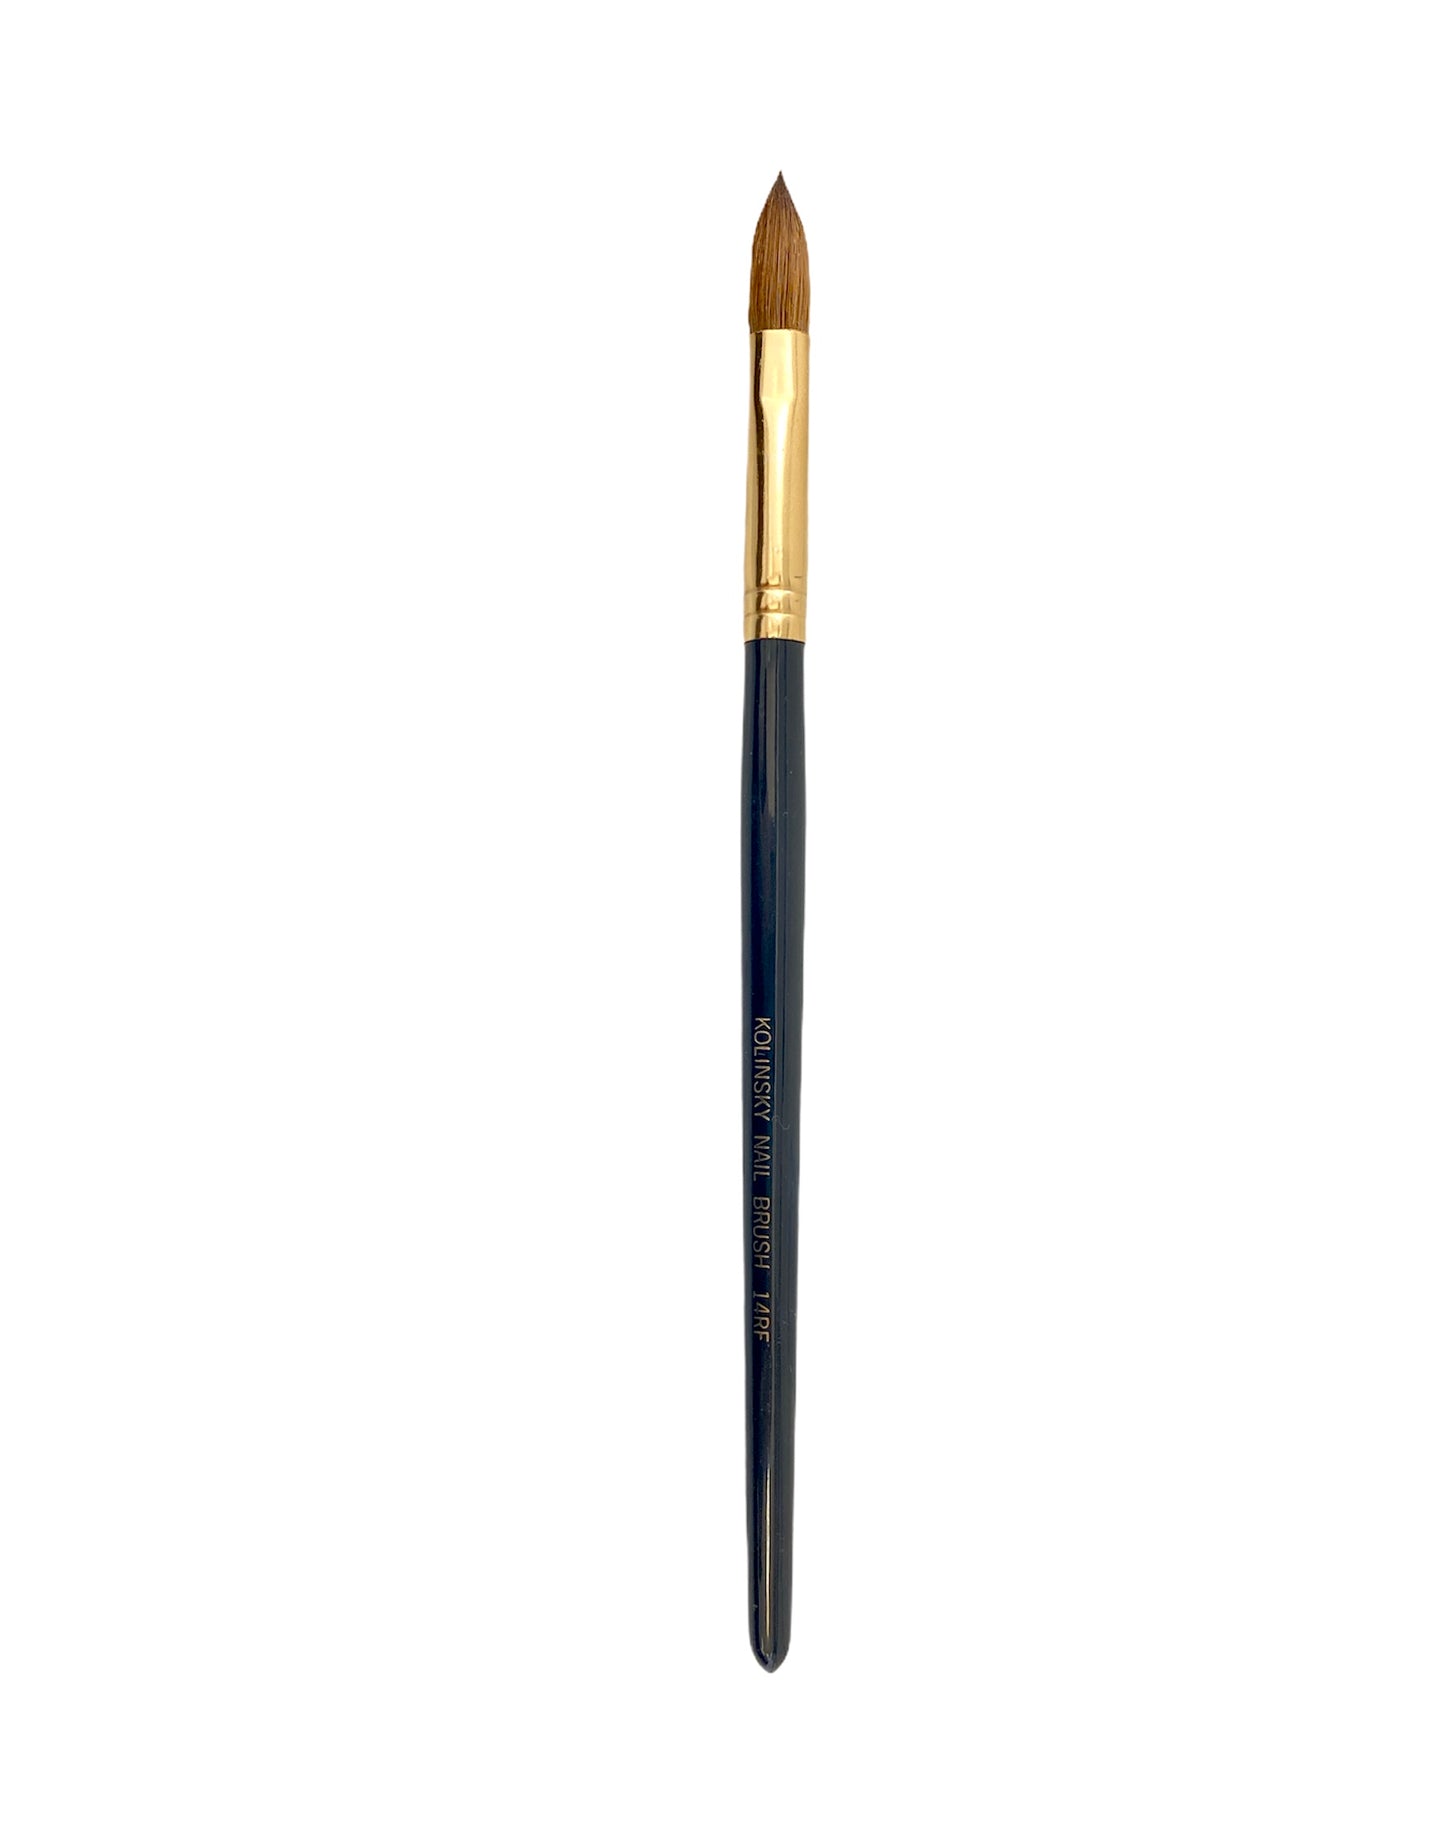 Kolinsky - Acrylic Brush back size 12R - #BB12R - Premier Nail Supply 